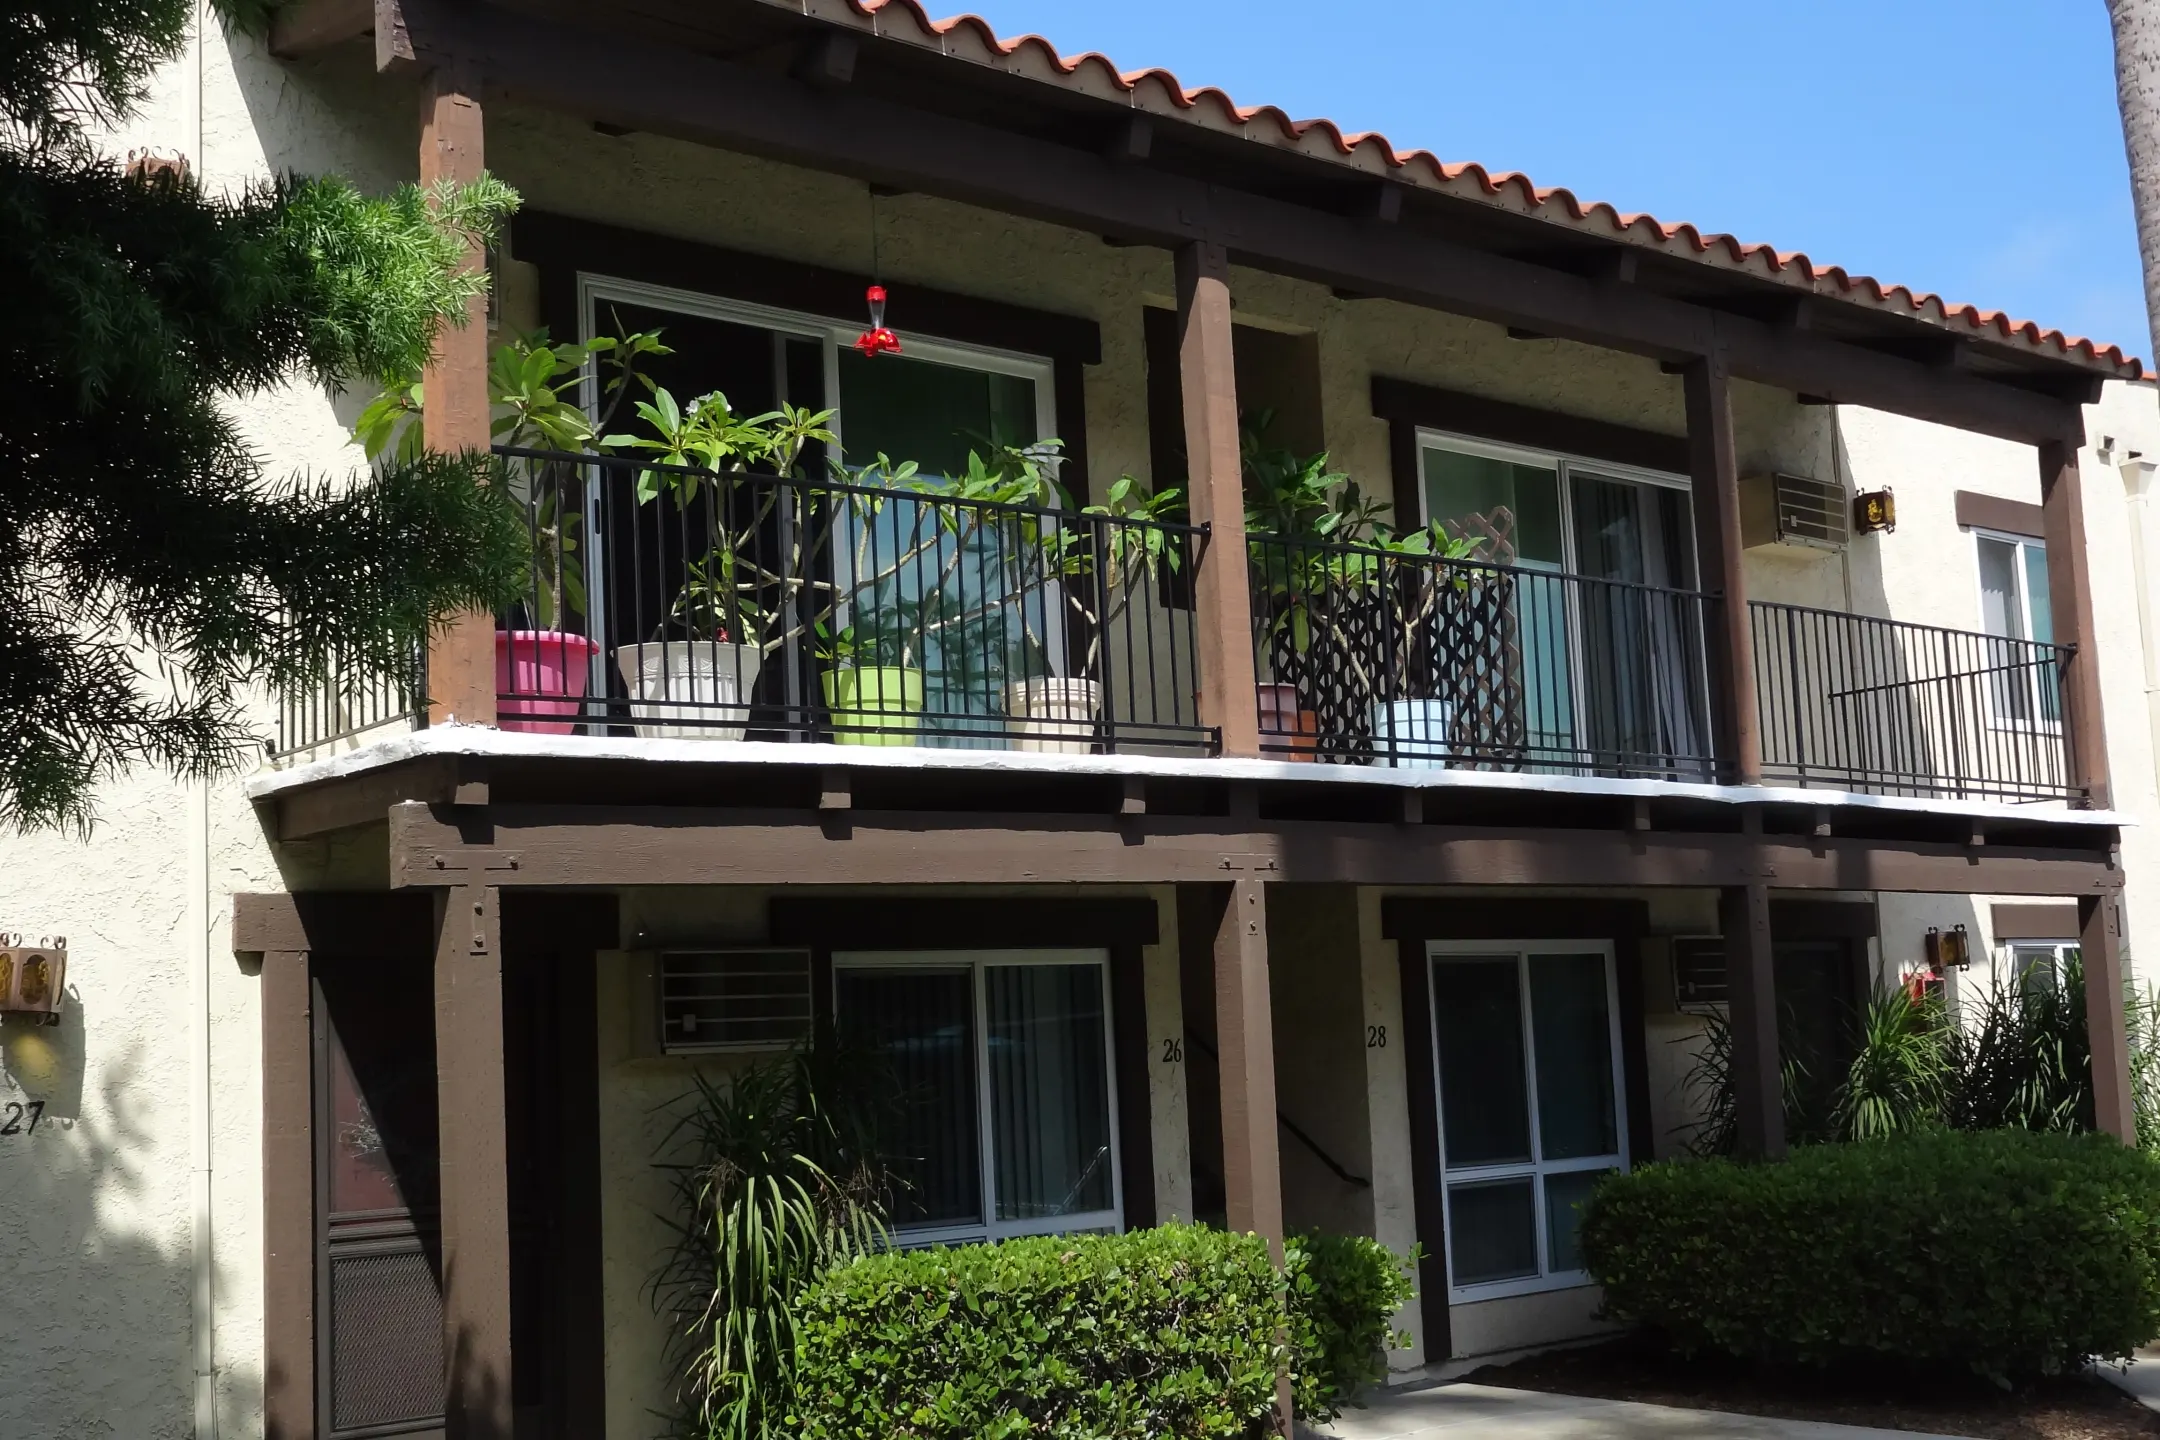 Building - The Maddox Apartments - Huntington Beach, CA